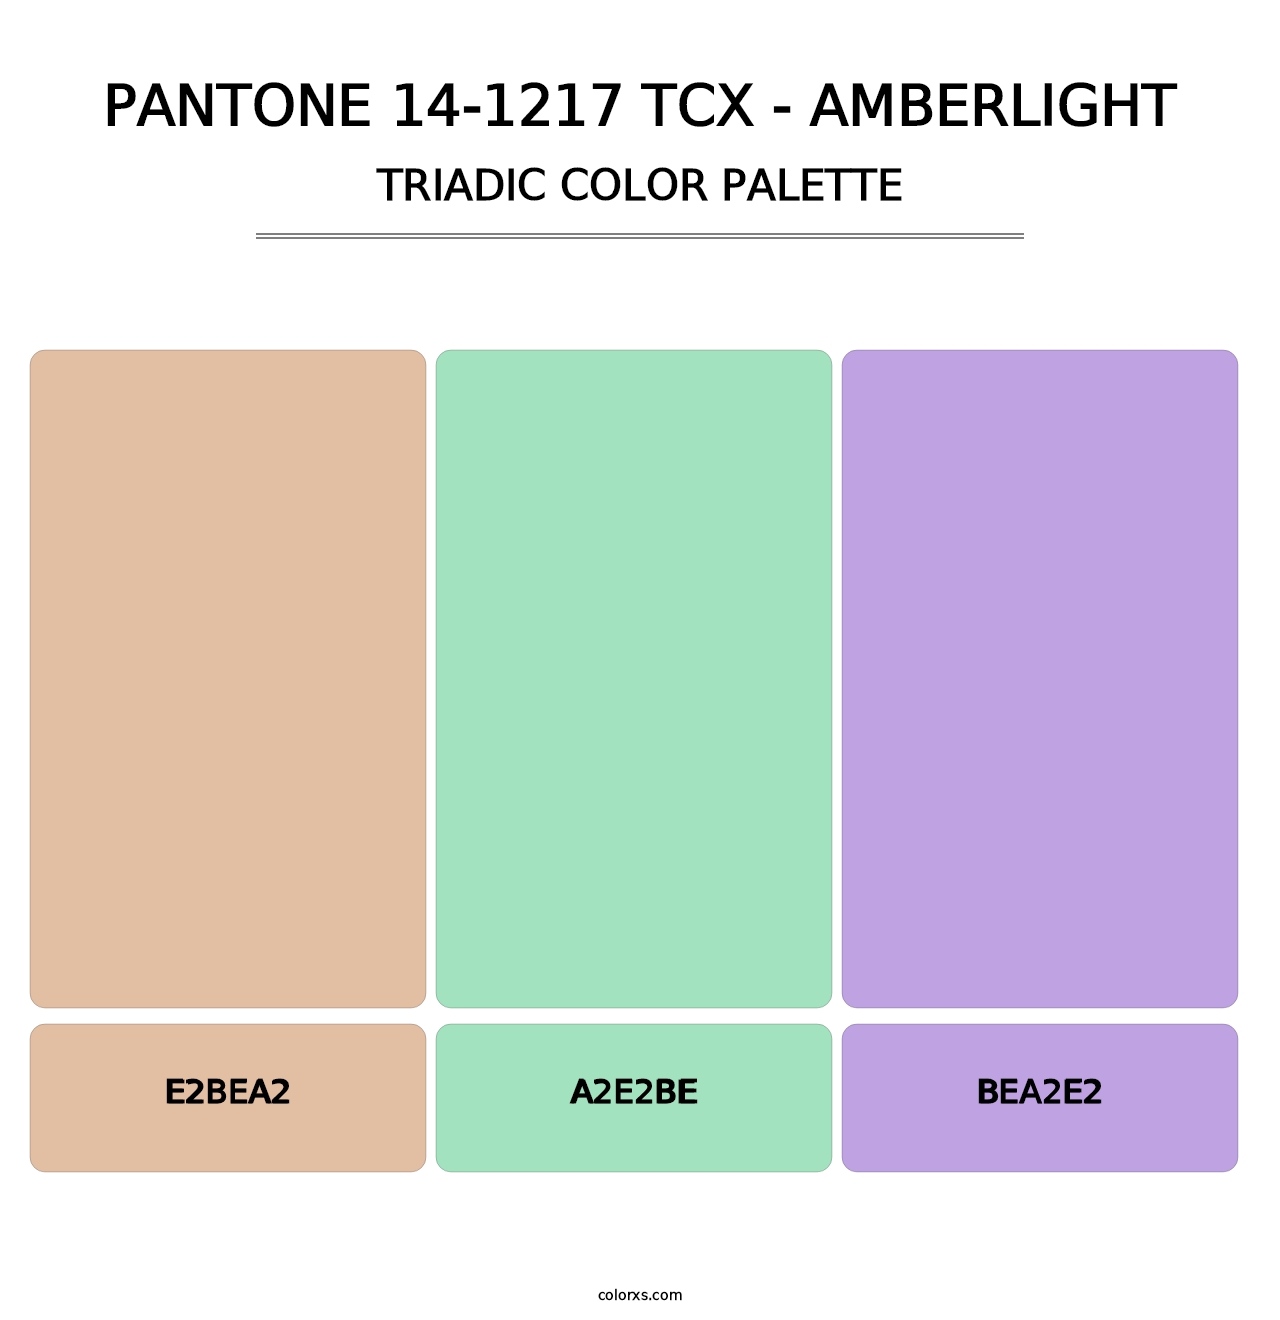 PANTONE 14-1217 TCX - Amberlight - Triadic Color Palette